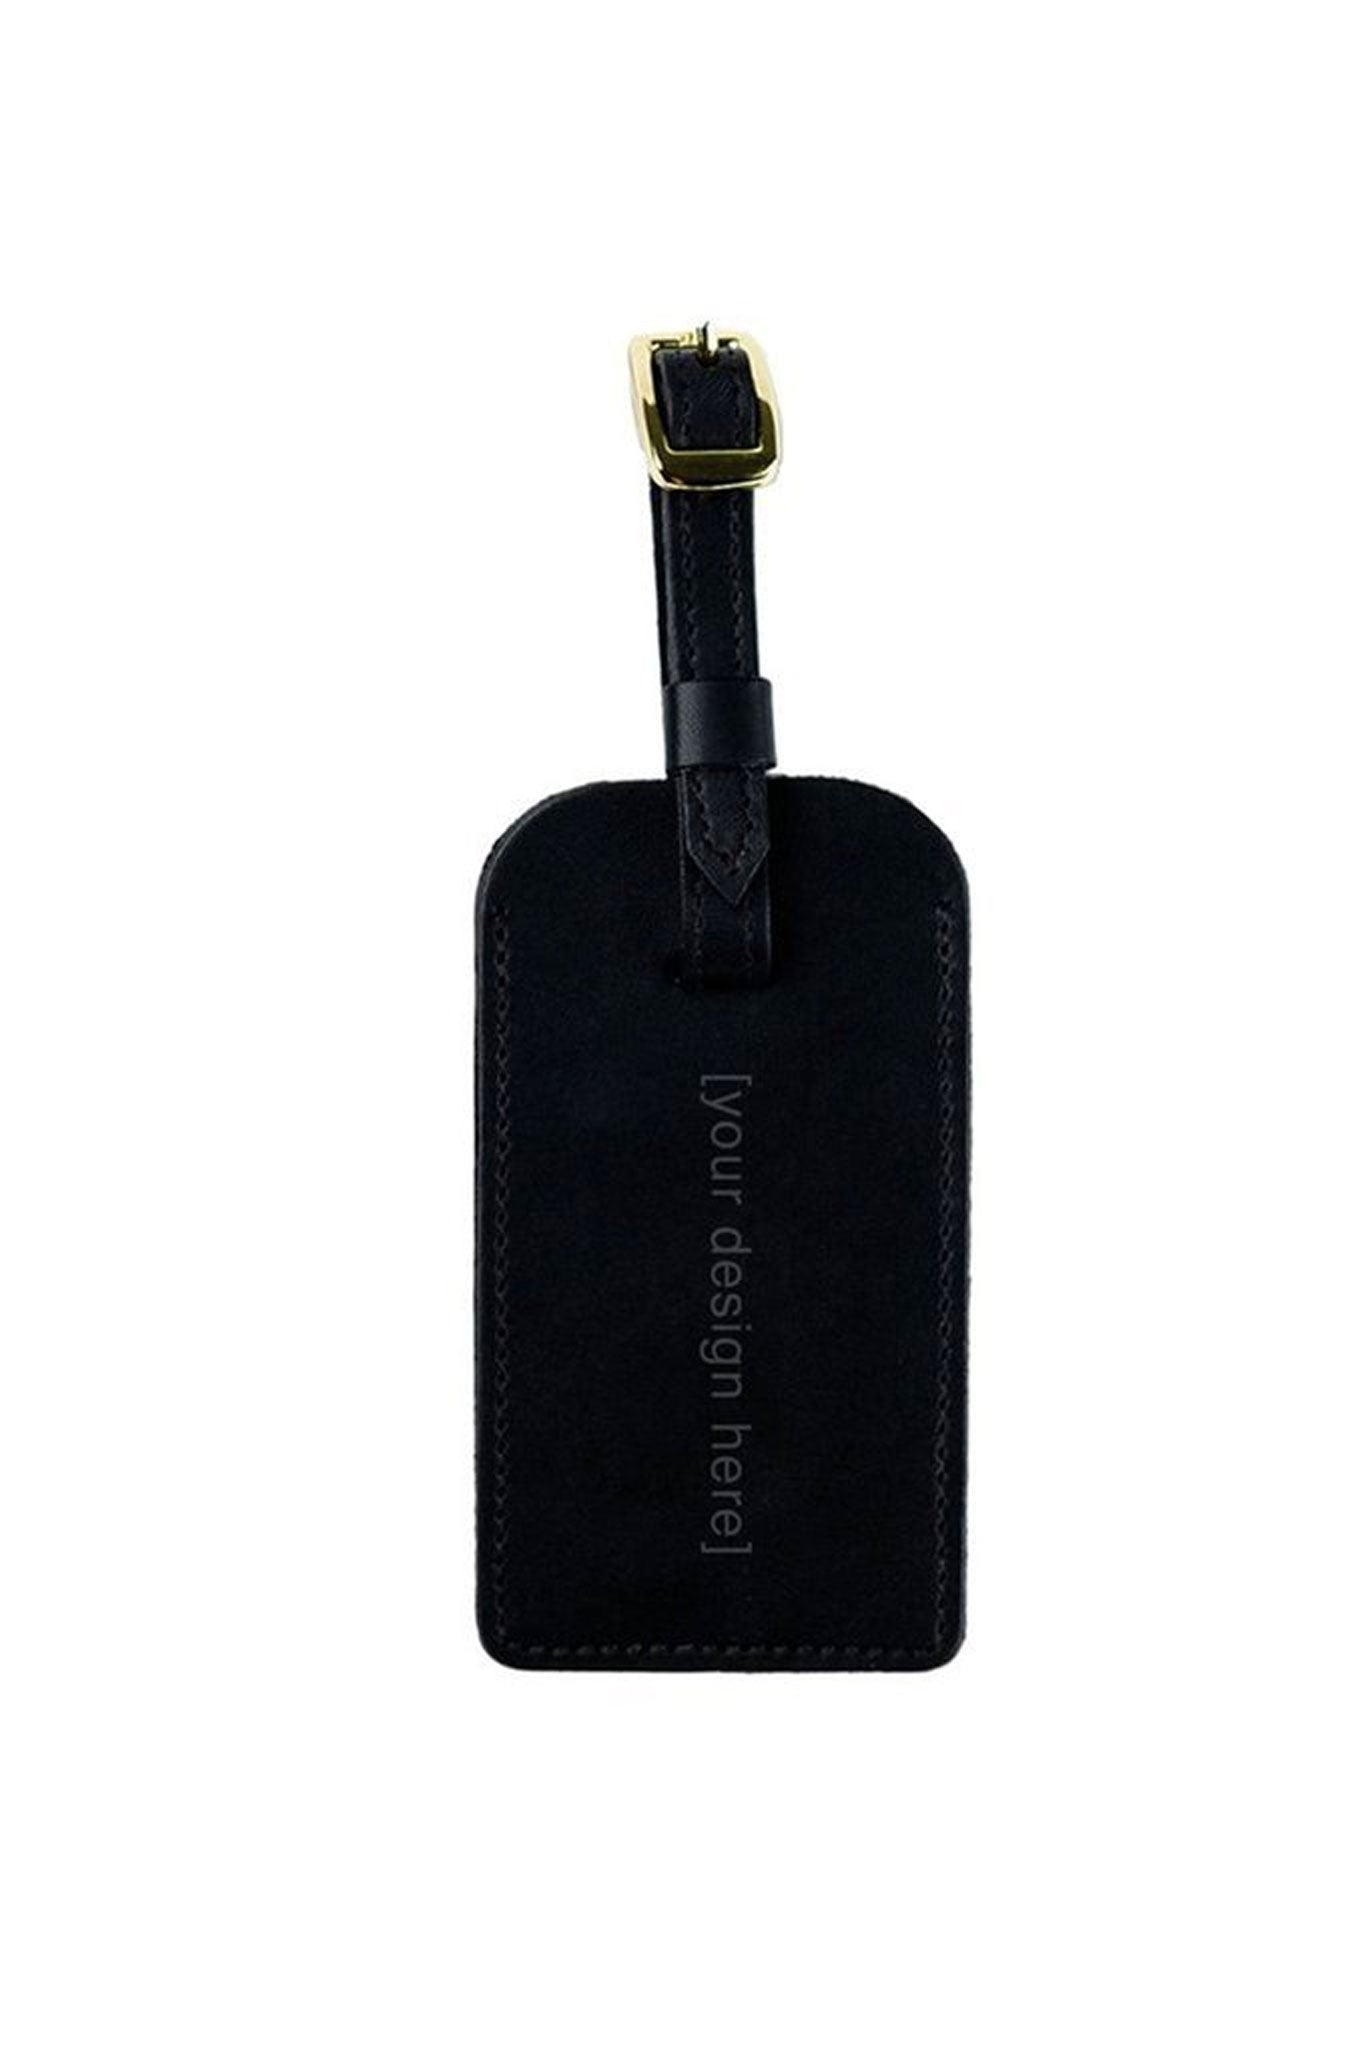 Lug Tag – Black and Gold Foil Cowhide Luggage Tag - Cowhide Bags Au